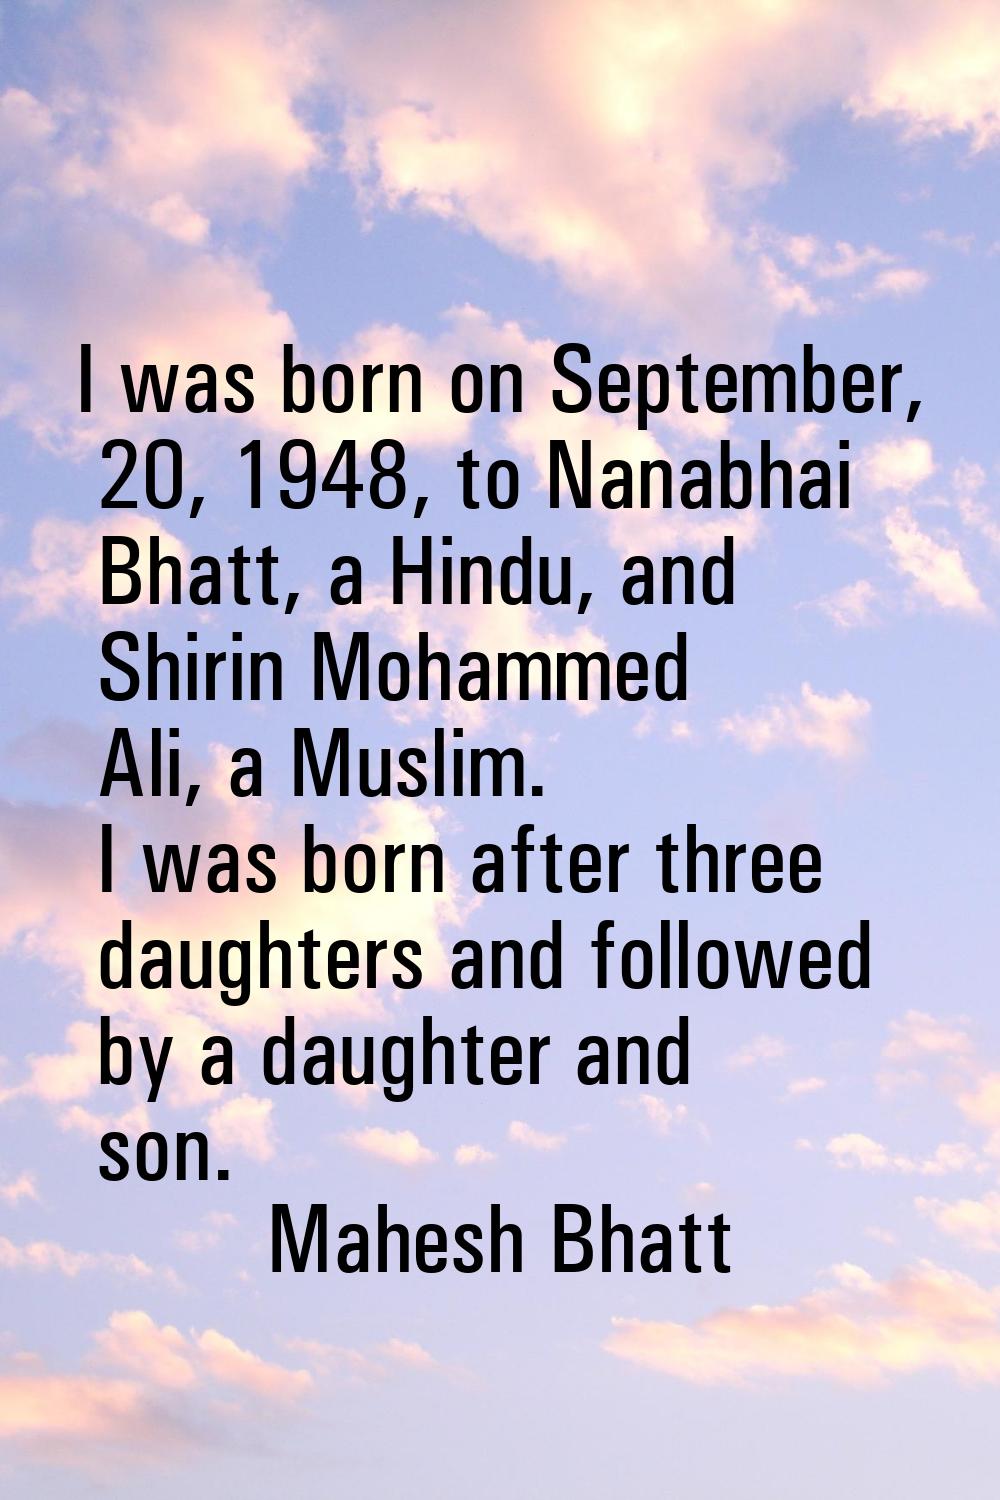 I was born on September, 20, 1948, to Nanabhai Bhatt, a Hindu, and Shirin Mohammed Ali, a Muslim. I